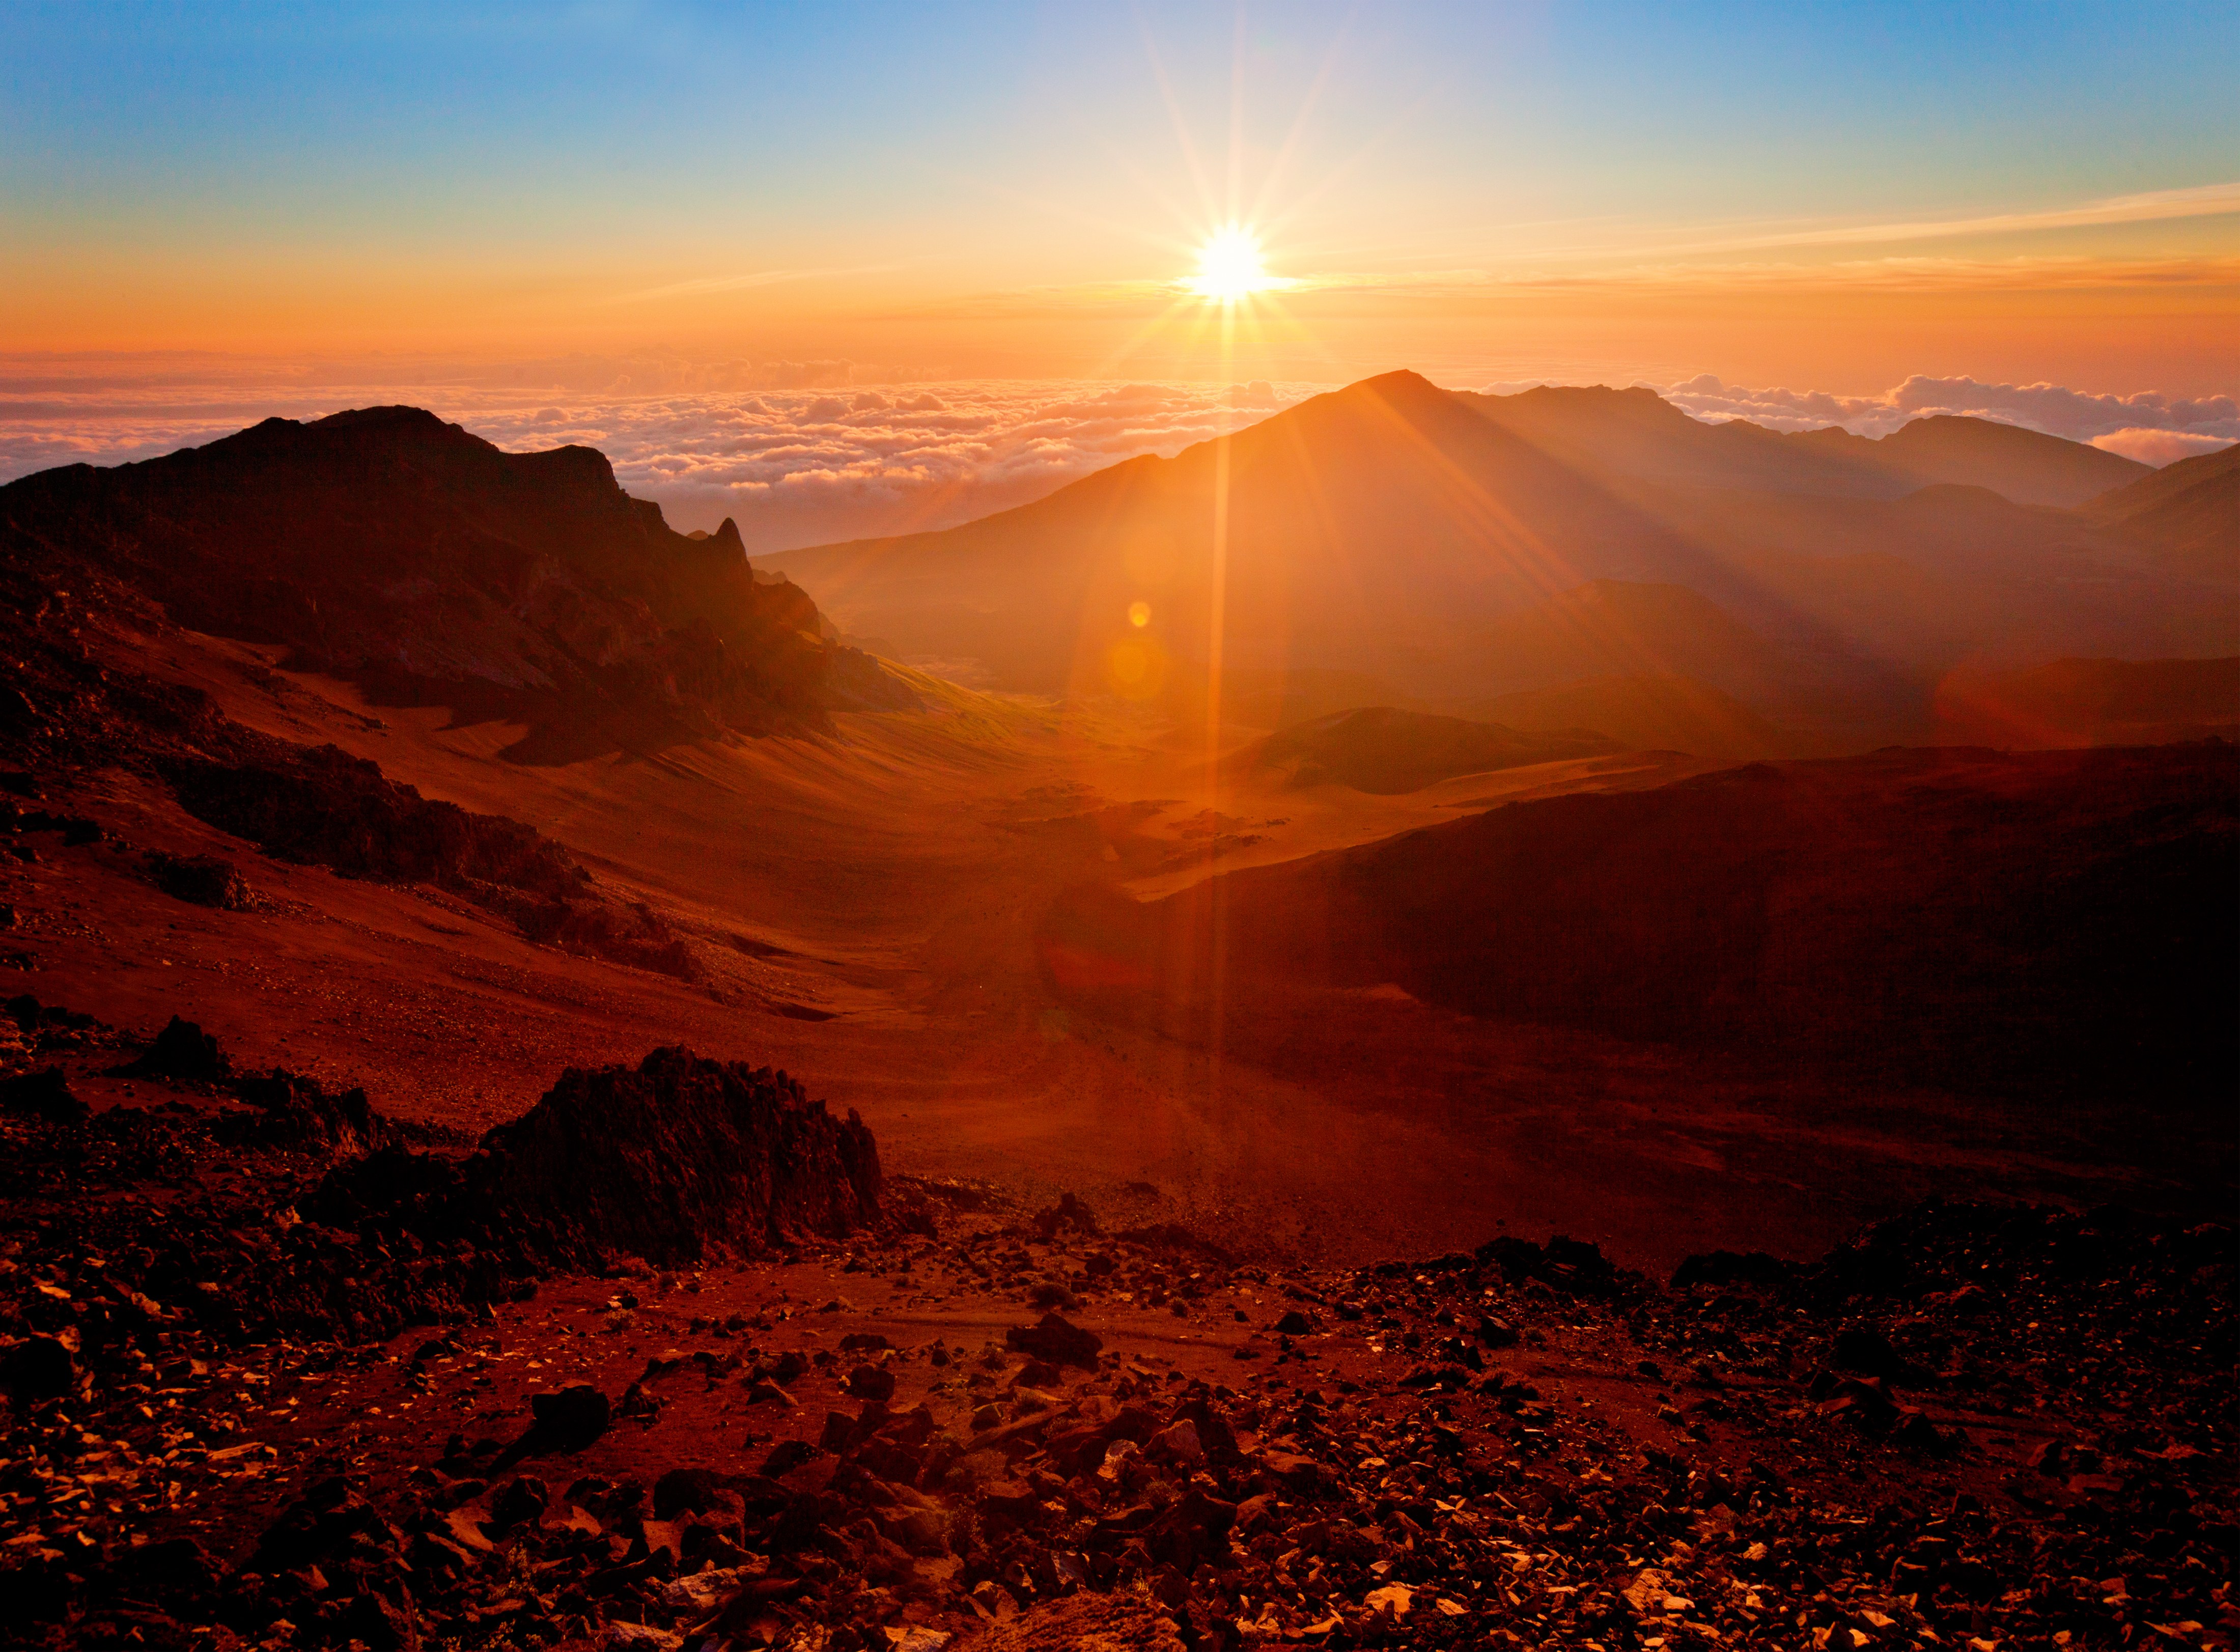 Maui's Haleakala National Park Sunrise Is So Popular, You Have to ...